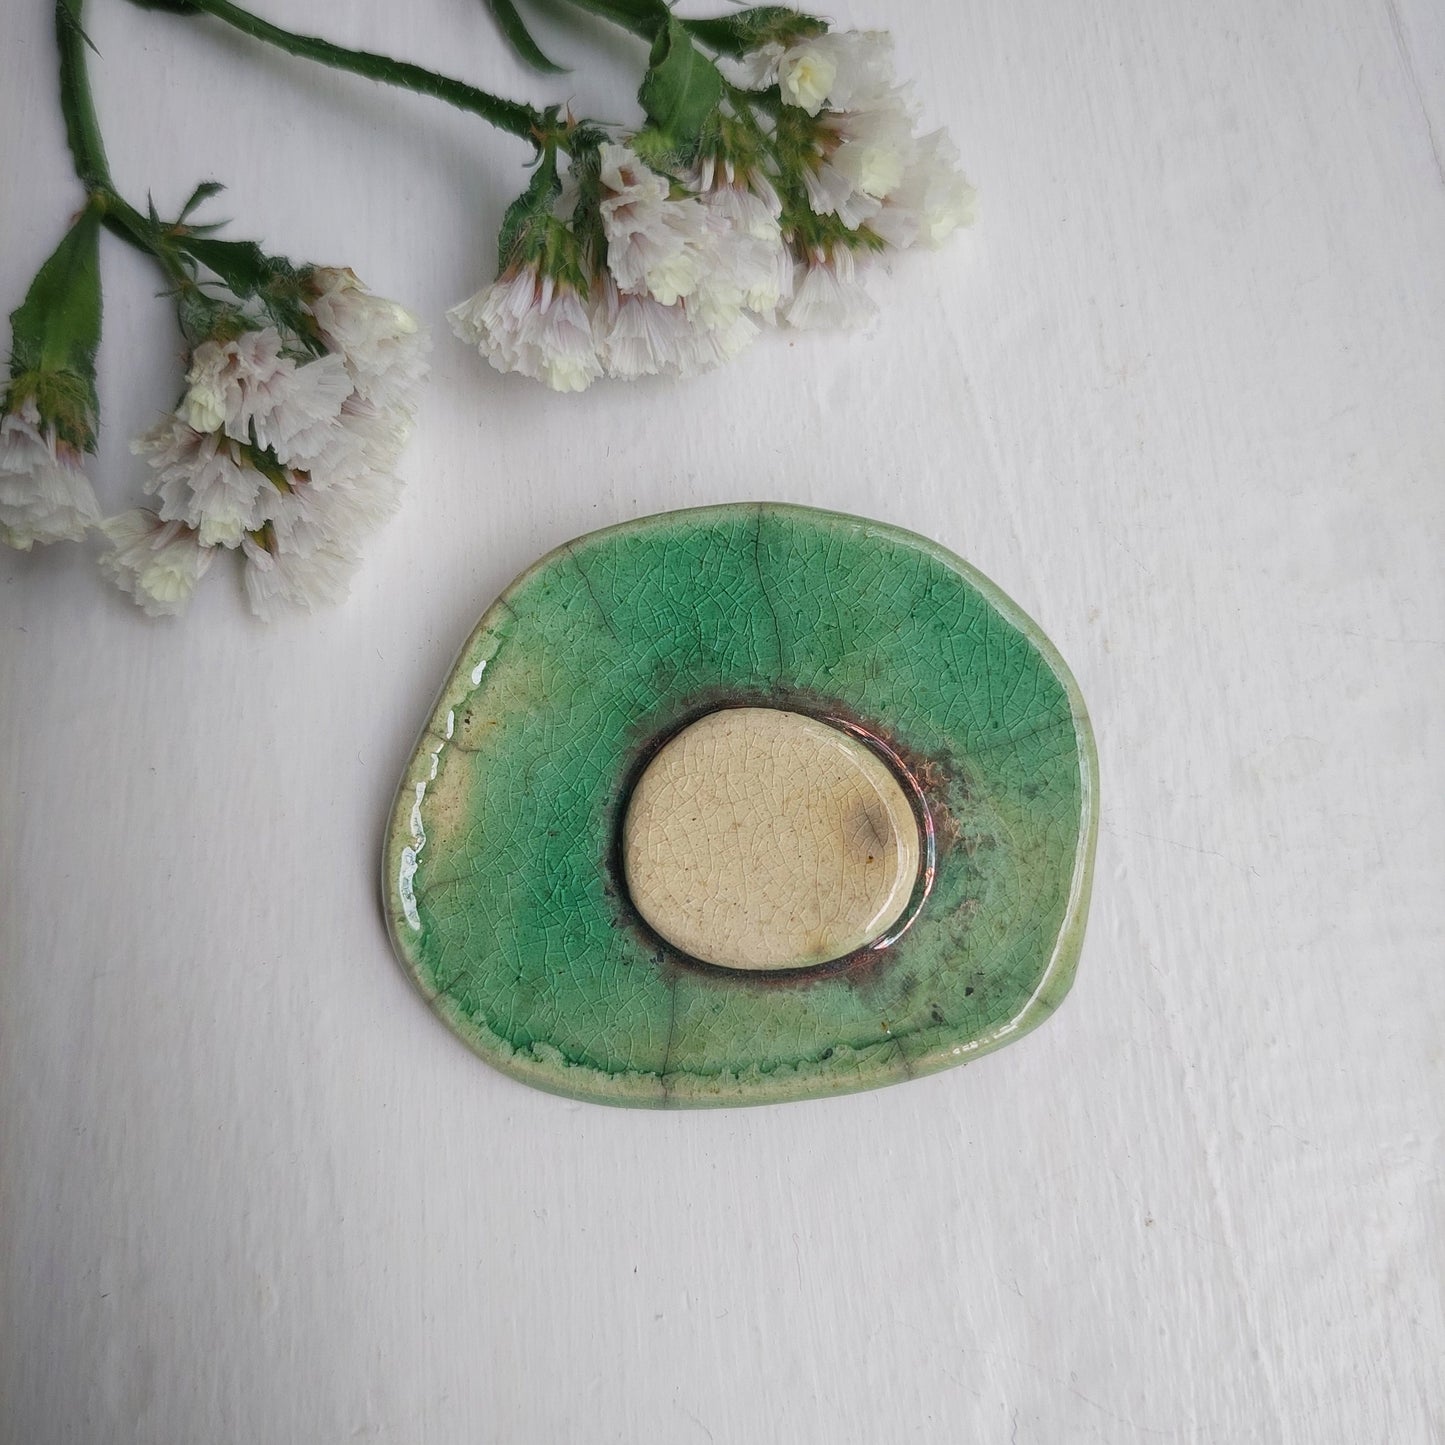 Spilla verde e oro in ceramica verde e bianca Raku con base in metallo.